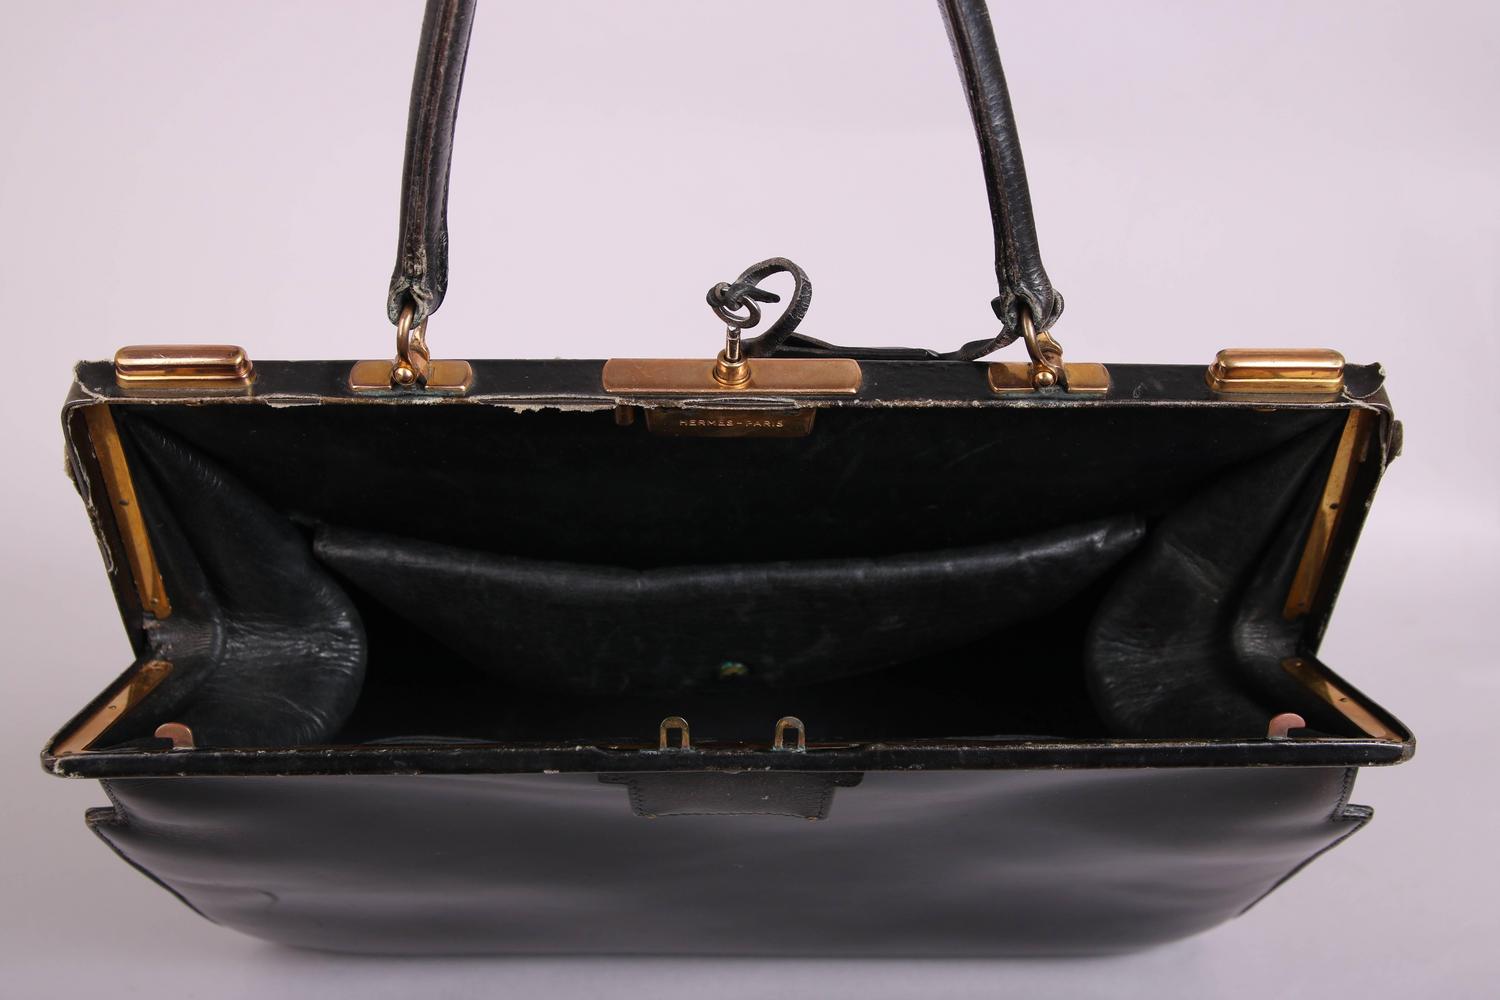 Vintage Hermes Black Leather Top Handle Handbag W/Lock and Key For Sale at 1stdibs